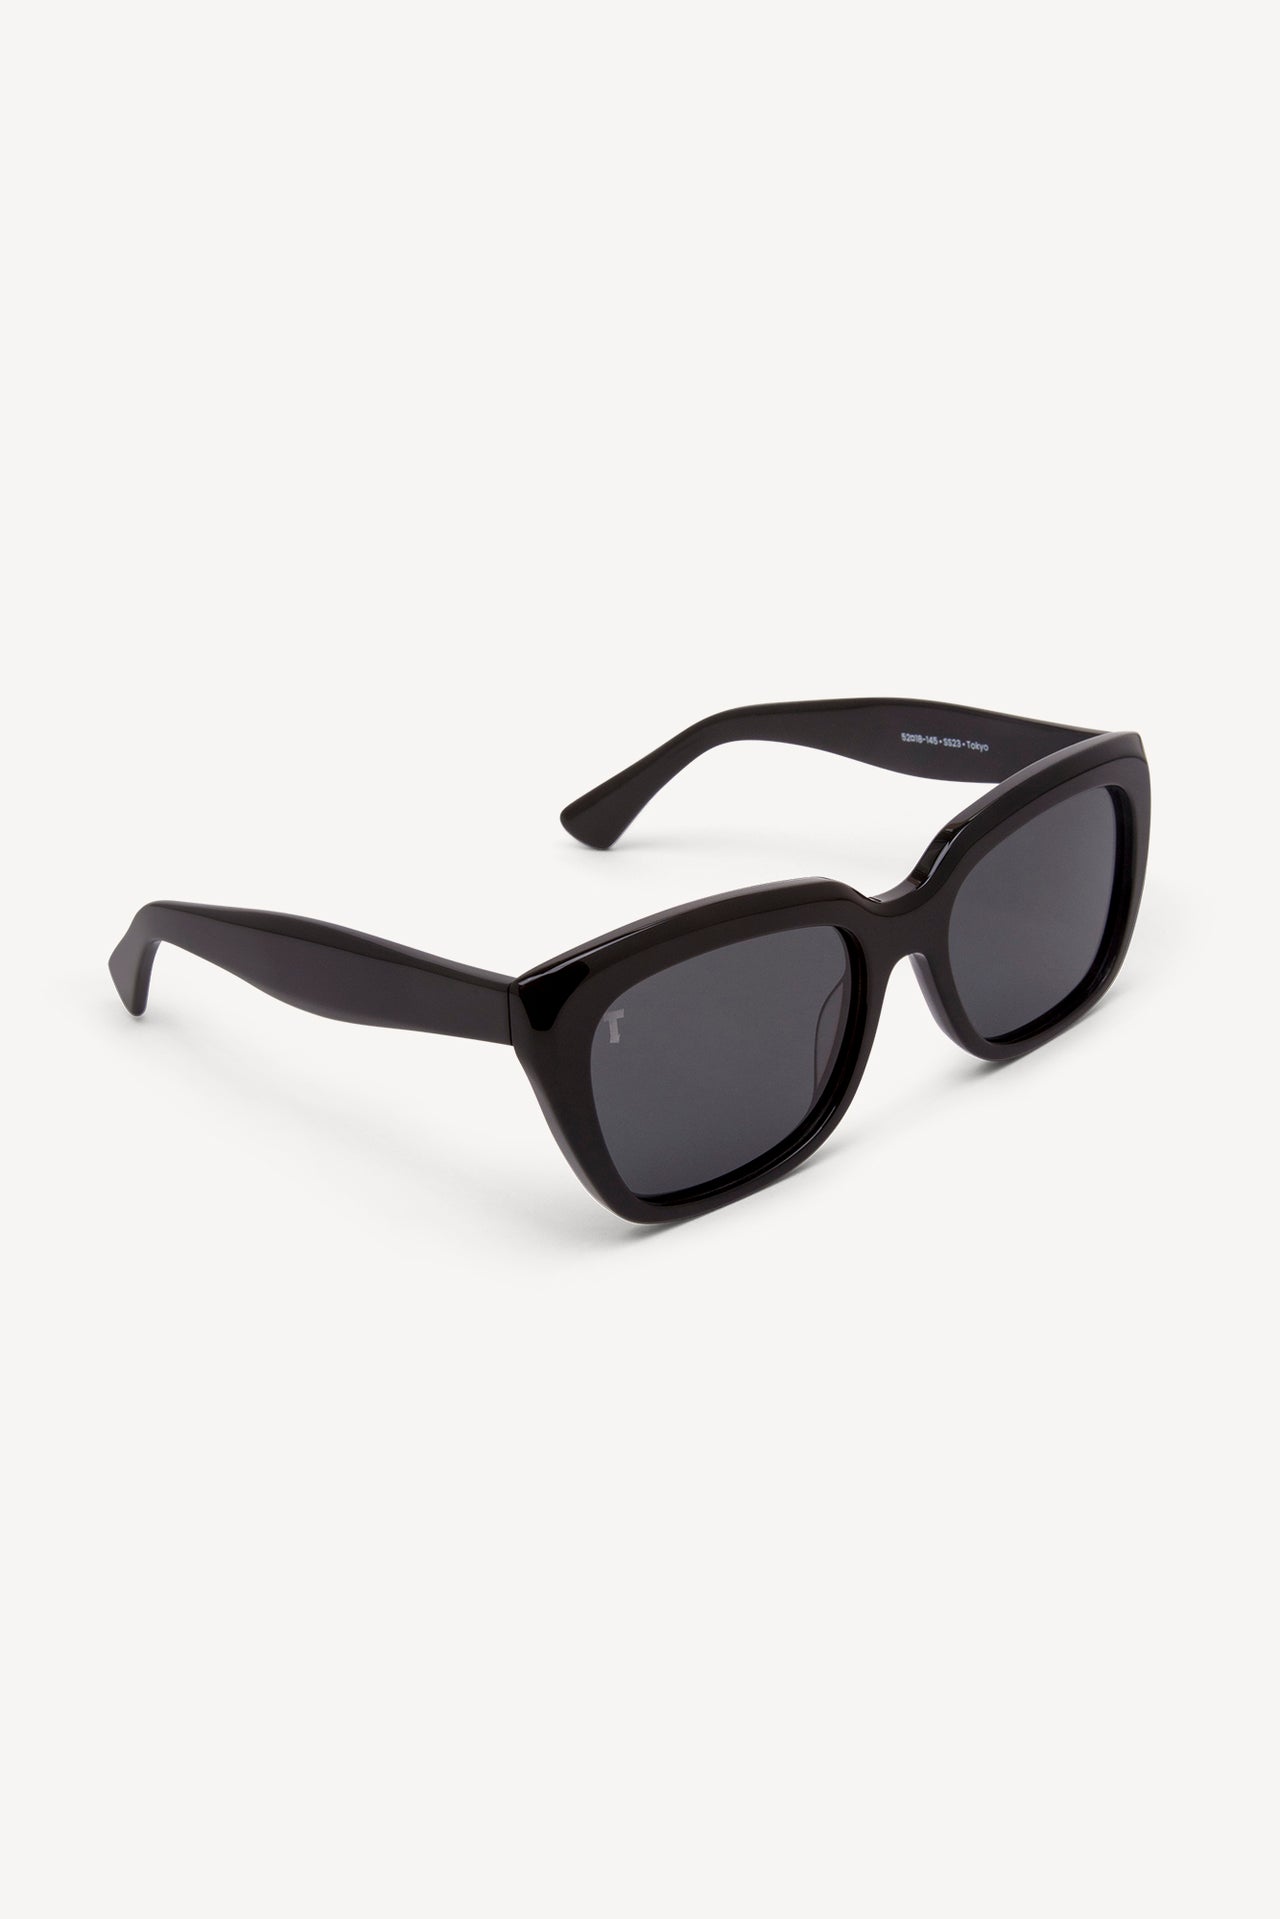 TOATIE Tokyo Cat Eye Sunglasses BLACK/BLACK